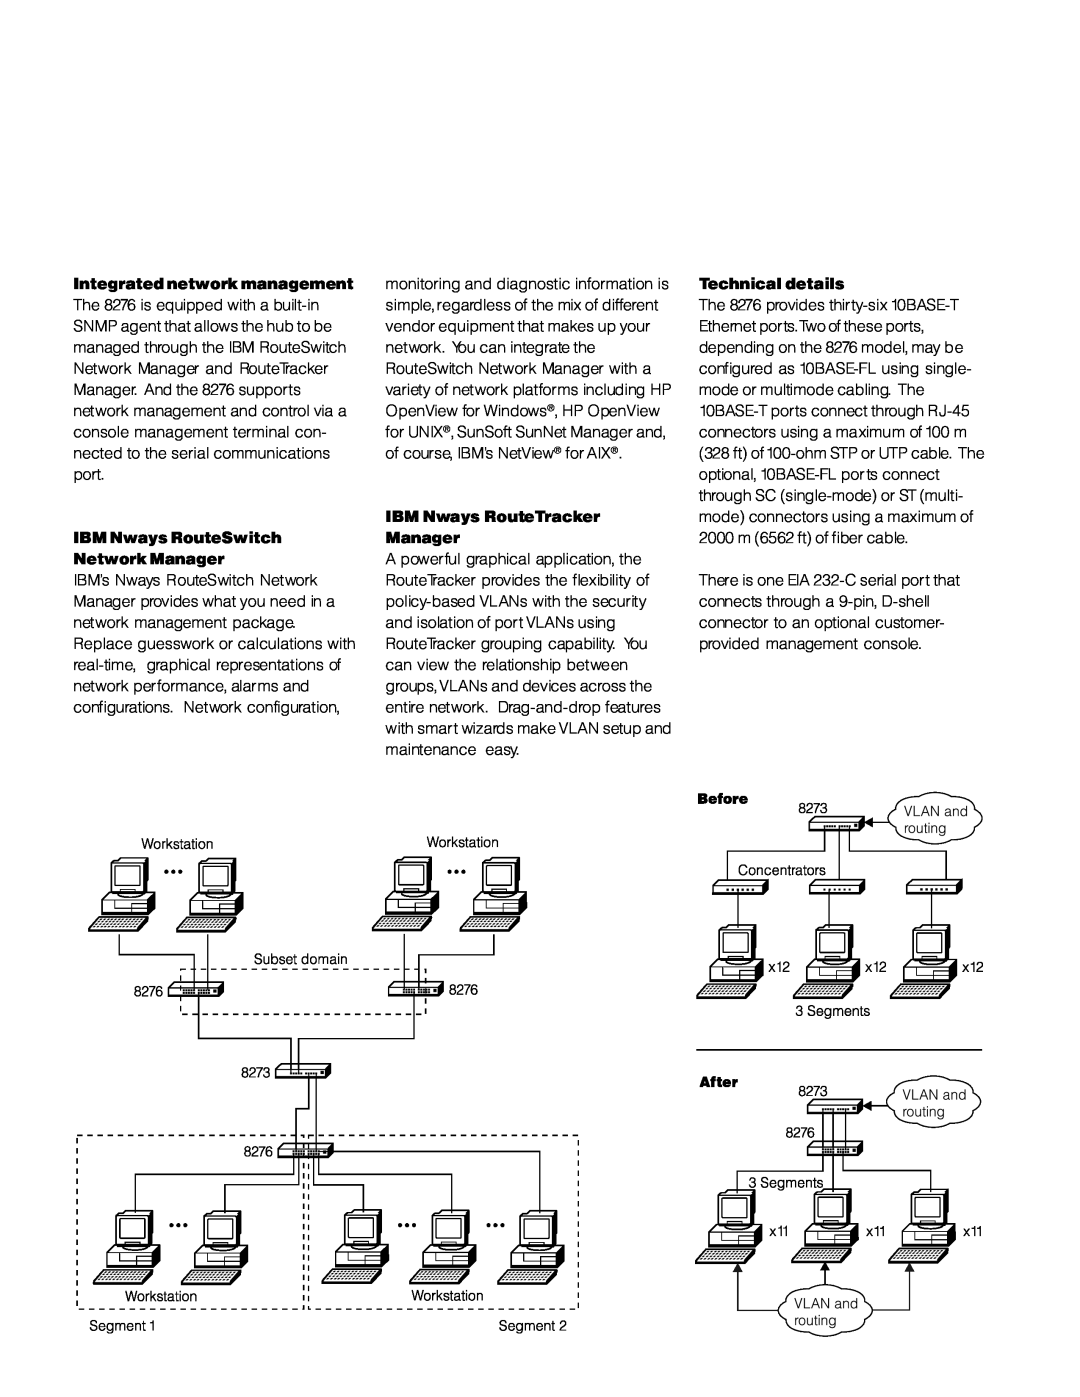 IBM 8276 manual Integrated network management, IBM Nways RouteSwitch Network Manager, IBM Nways RouteTracker Manager 